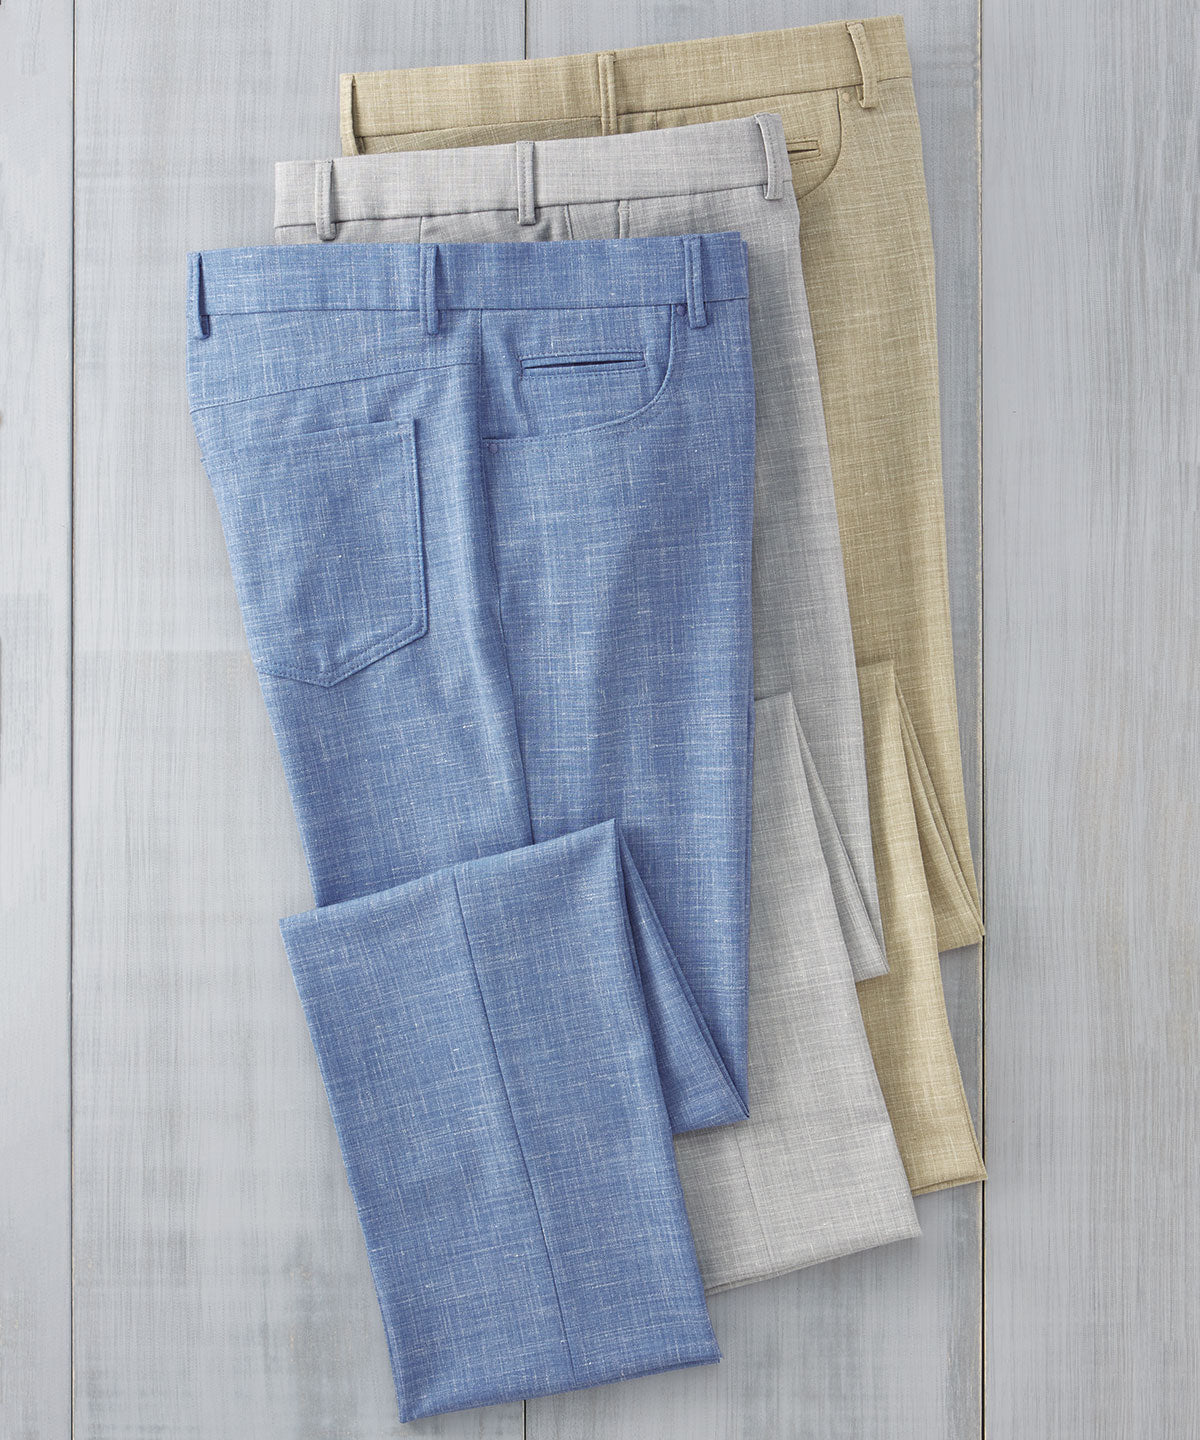 Fancy Linen Blend Trouser For Men at Rs 813 | Trousers for men, पुरुषों की  पतलून - Store Apt, Pathanamthitta | ID: 2850337178755